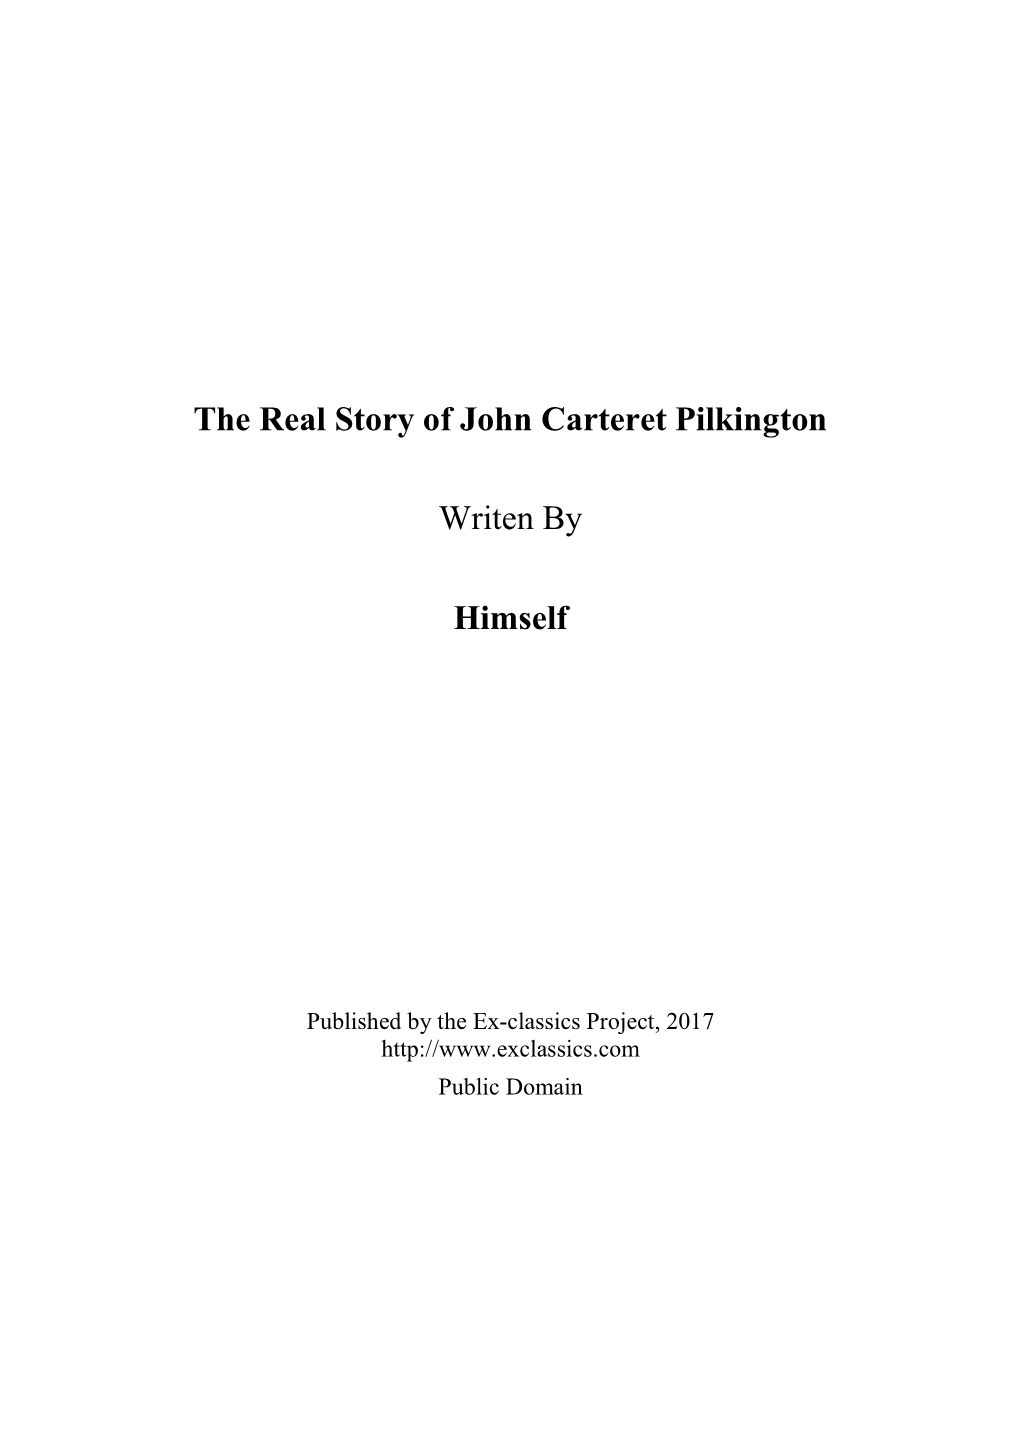 The Real Story of John Carteret Pilkington Writen by Himself